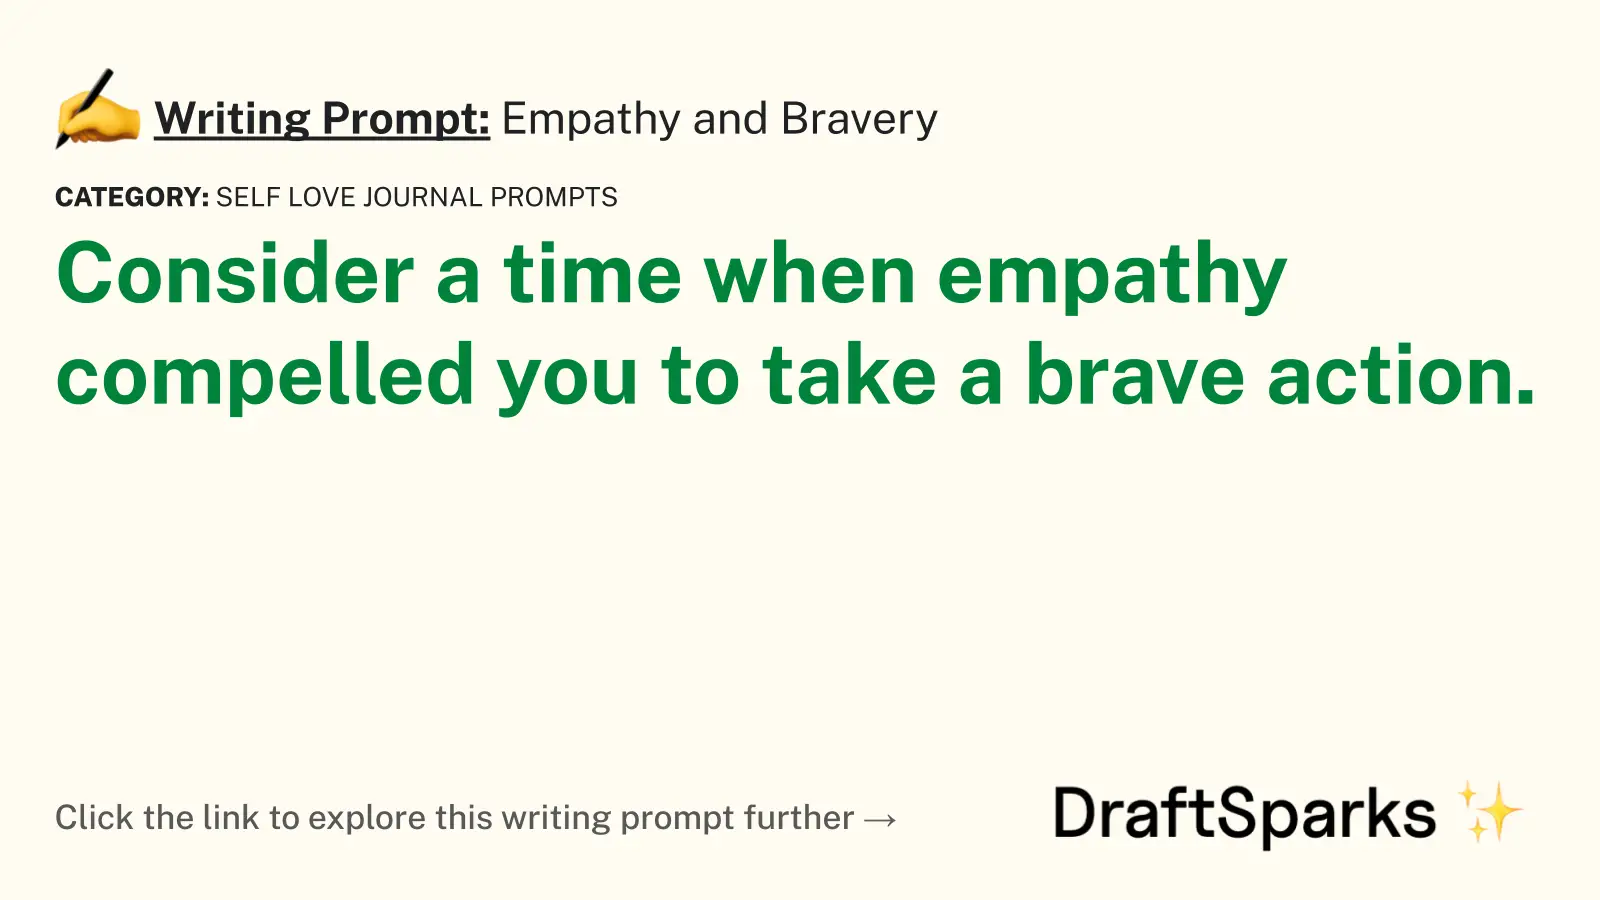 Empathy and Bravery